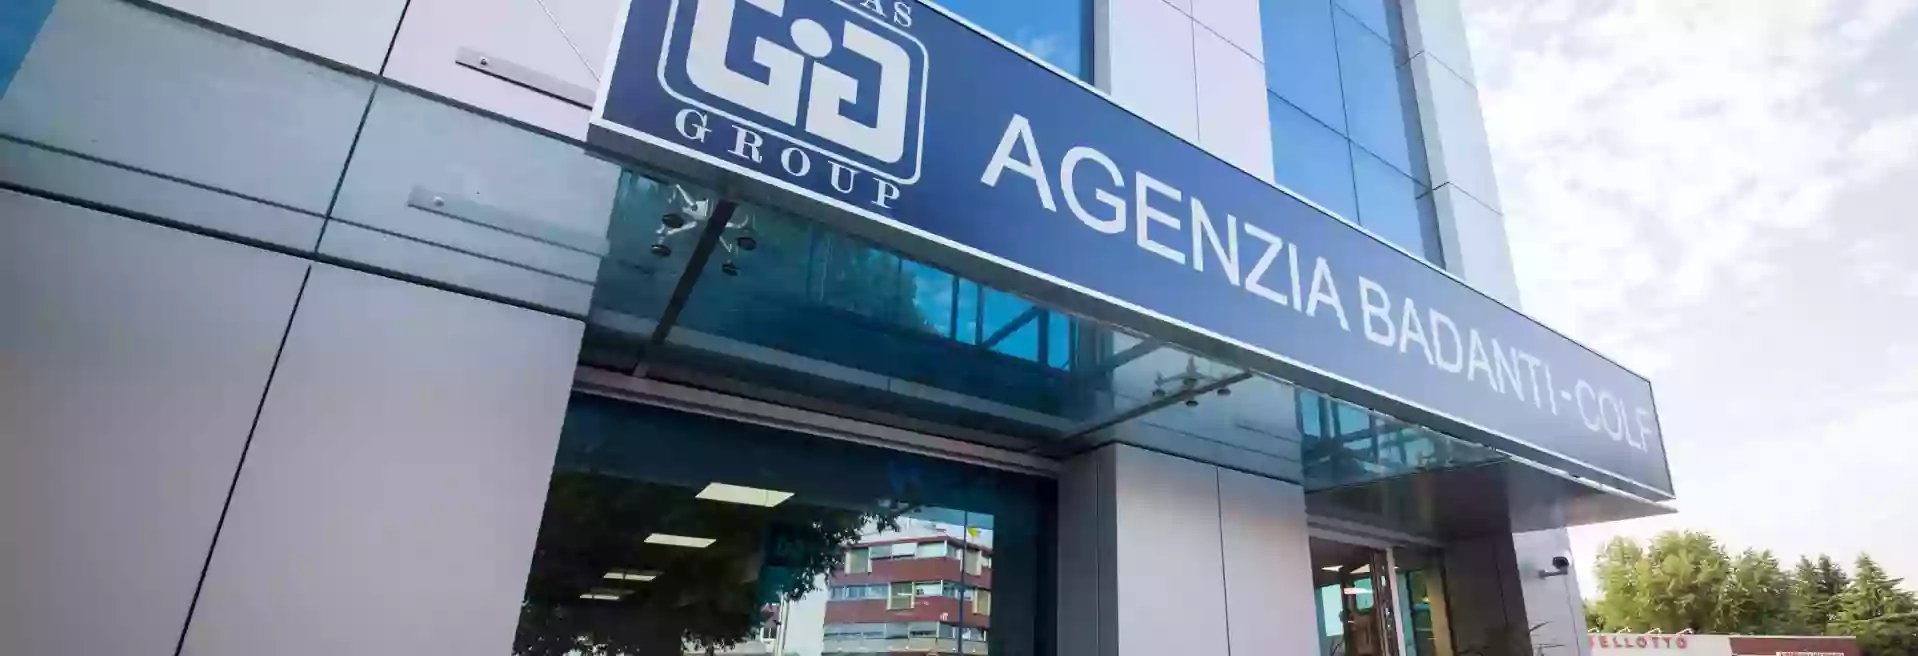 Gallas Group - Agenzia Badanti Trieste